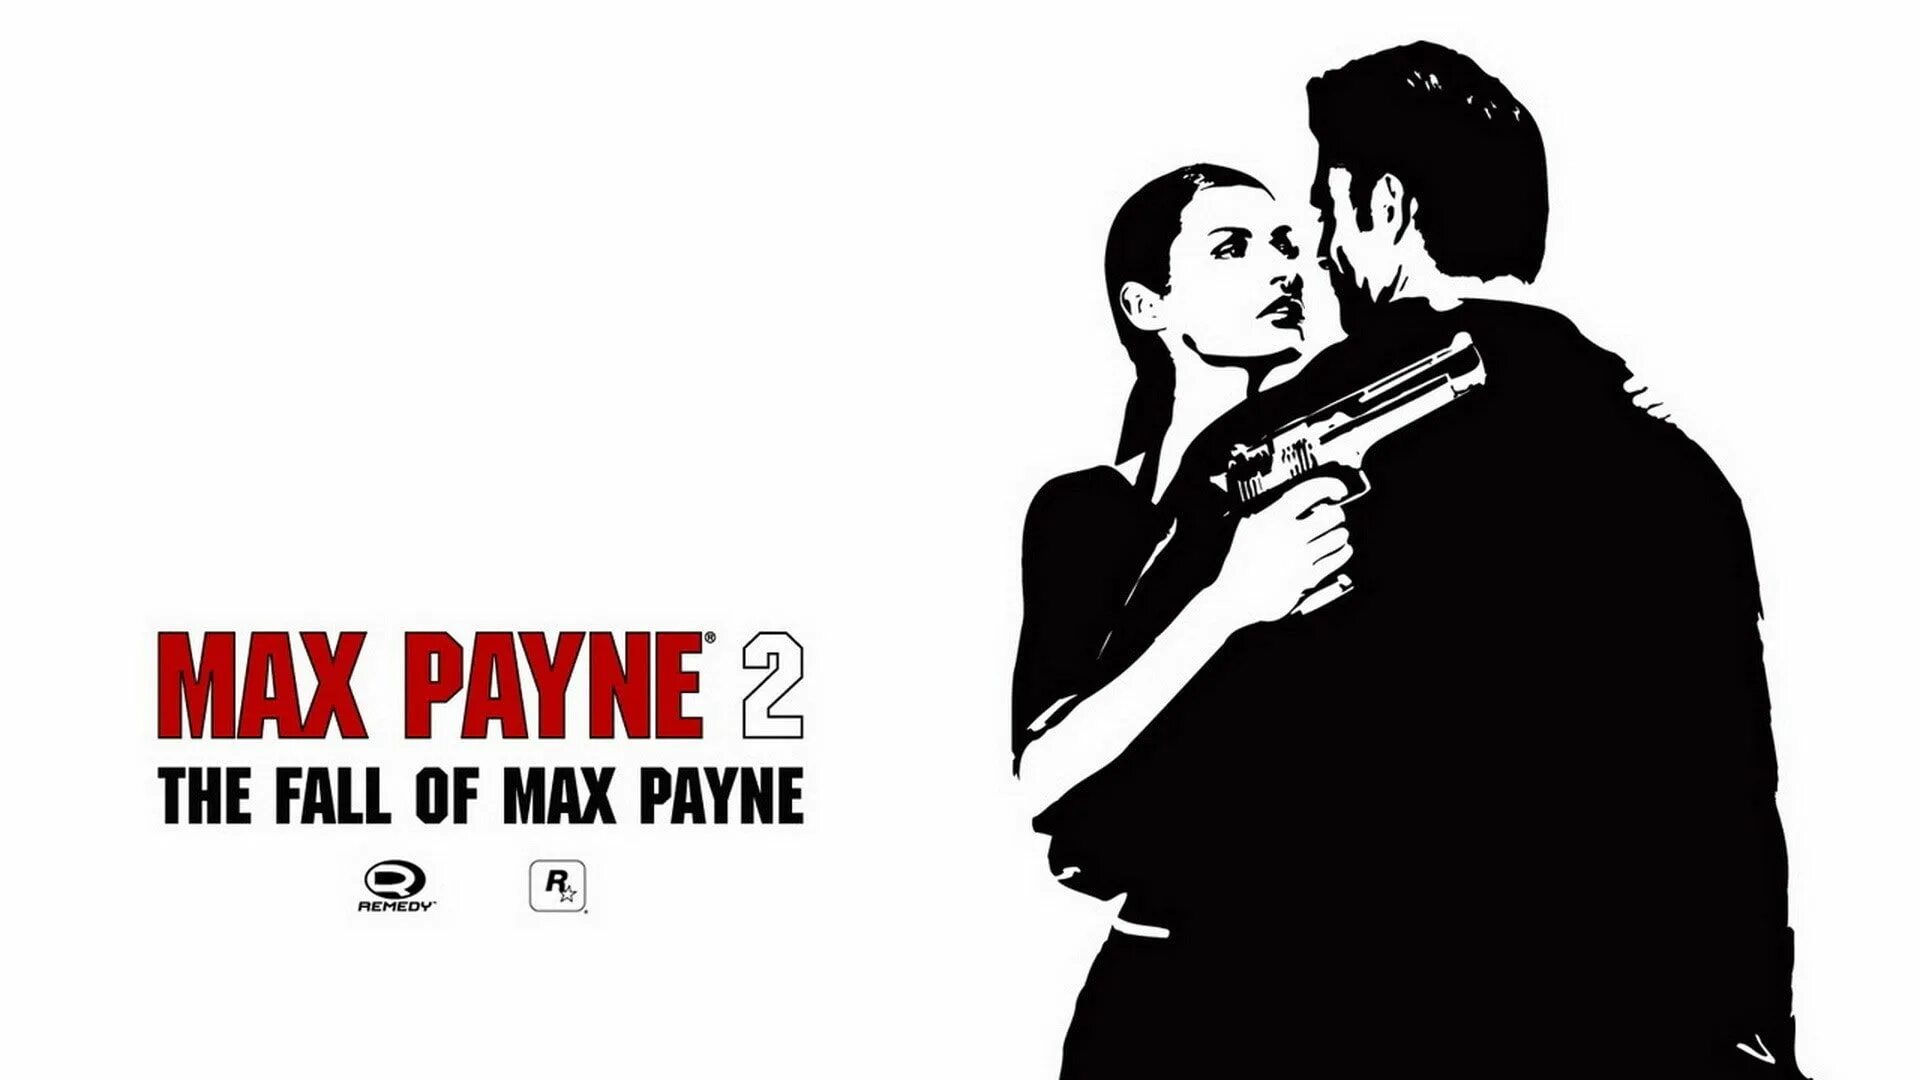 Два выстрела в сердце. Макс Пейн и Мона Сакс. Макс Пейн 2 Мона и Макс. Макс Пейн 2 девушка. Max Payne 2 Art Макс и Мона.